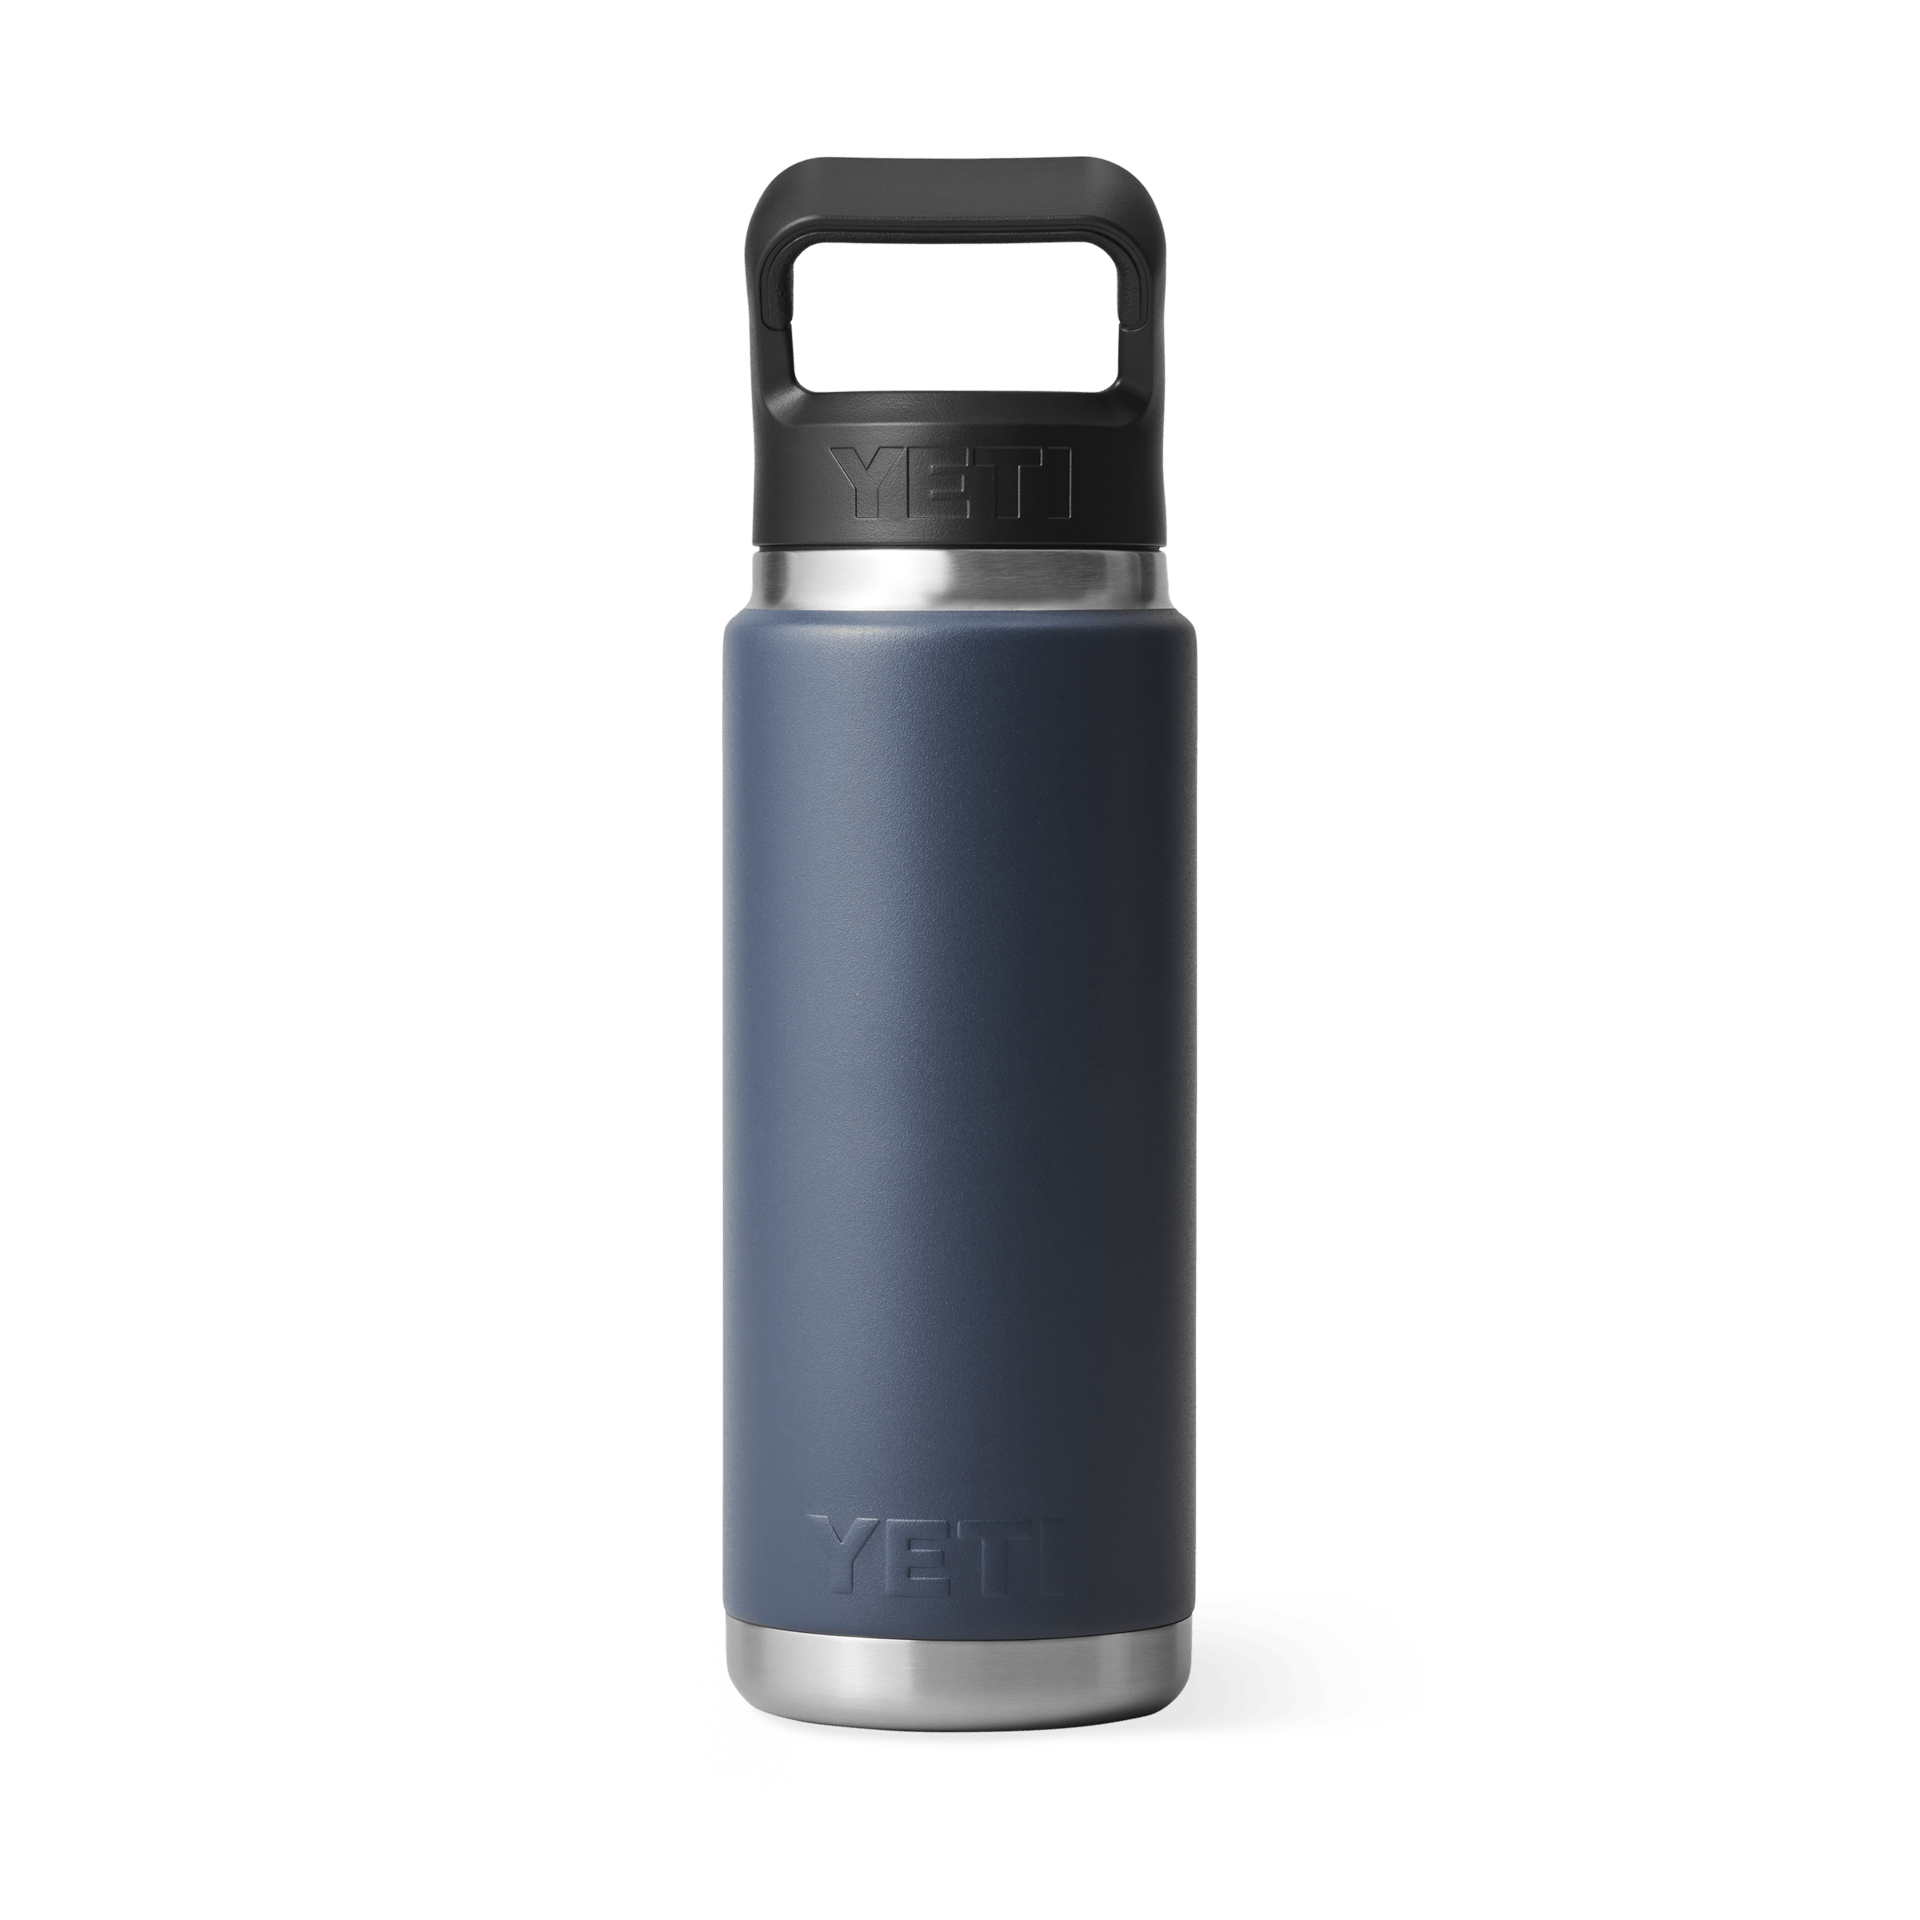 YETI Rambler 26 oz Water Bottle with Straw Cap - Navy - Southern 